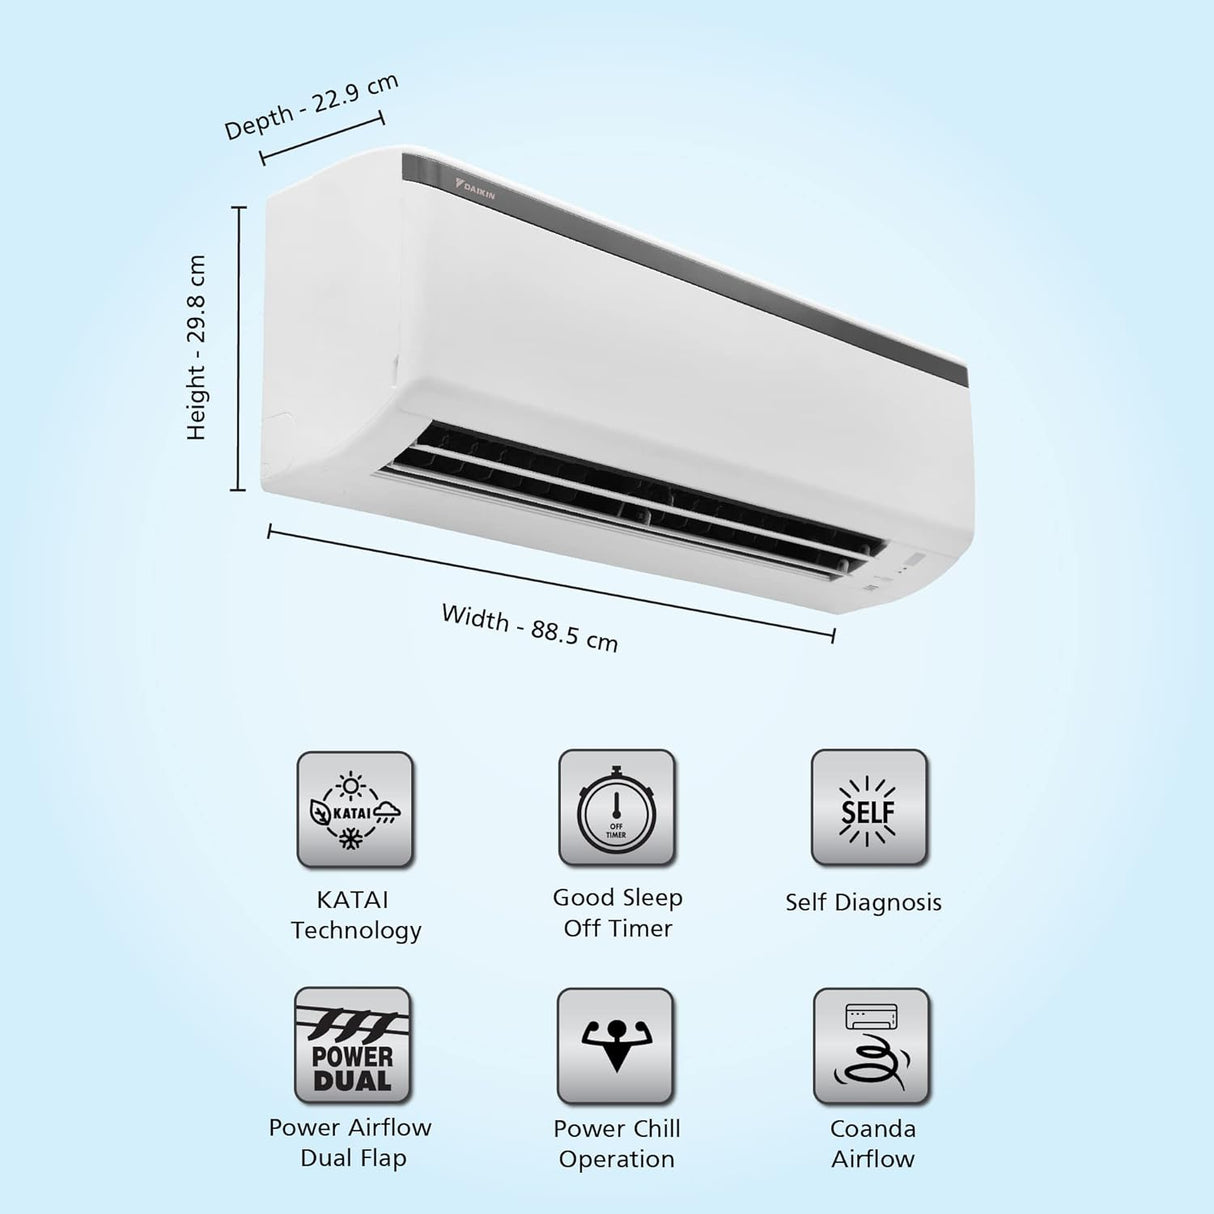 Best HVAC: Daikin 1.8T 3 Star Split AC - KATAI Tech, Alloy, 2022 Model, White.